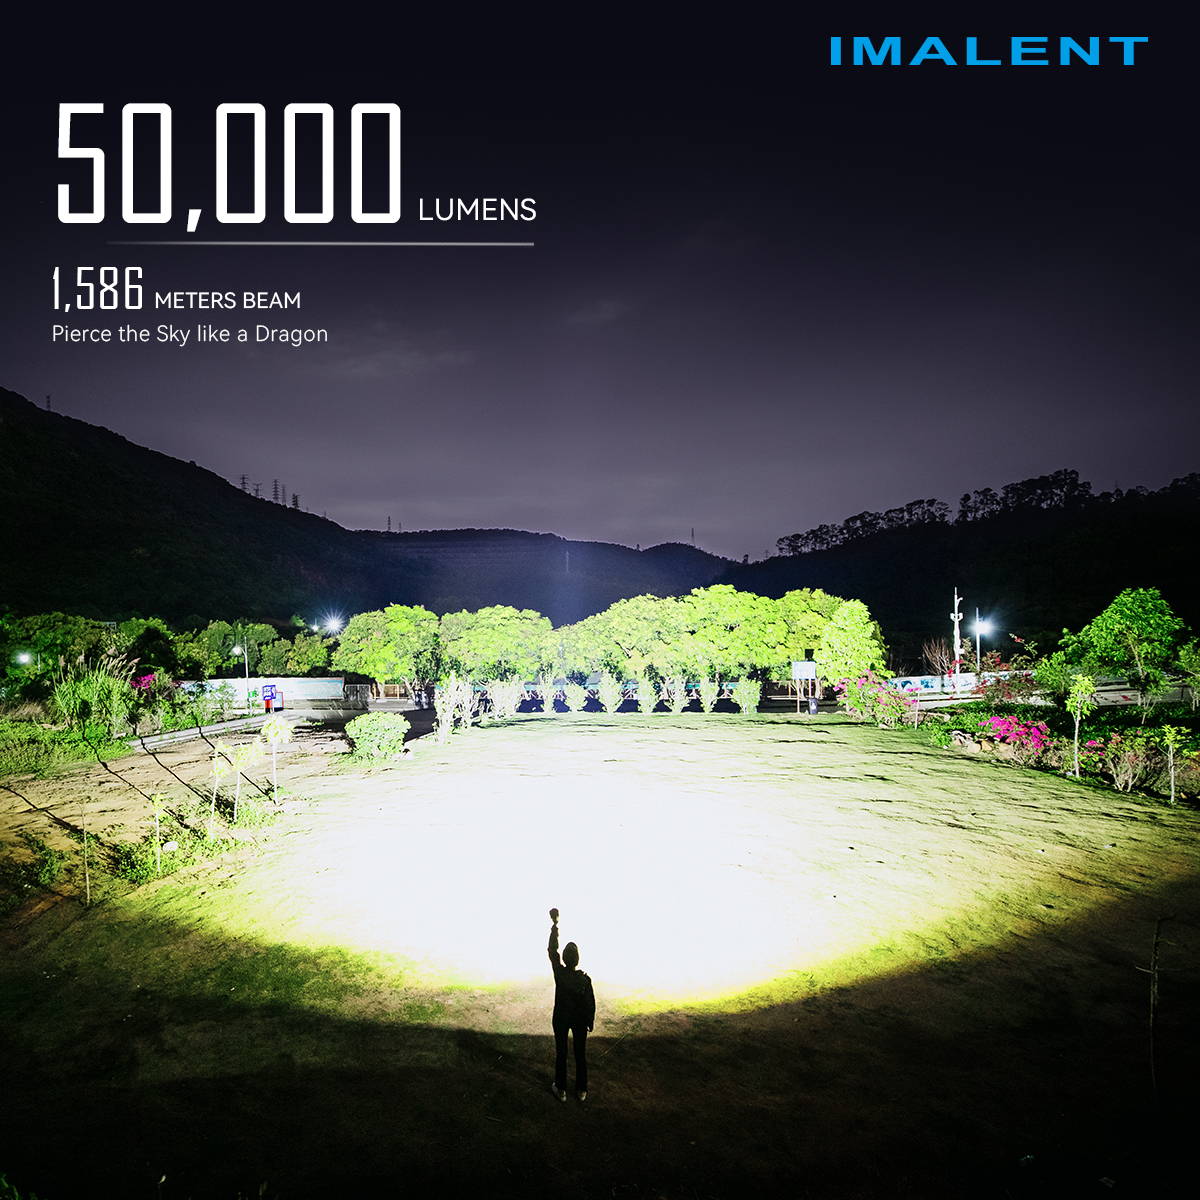 IMALENT MR90 Spot and flood flashlight